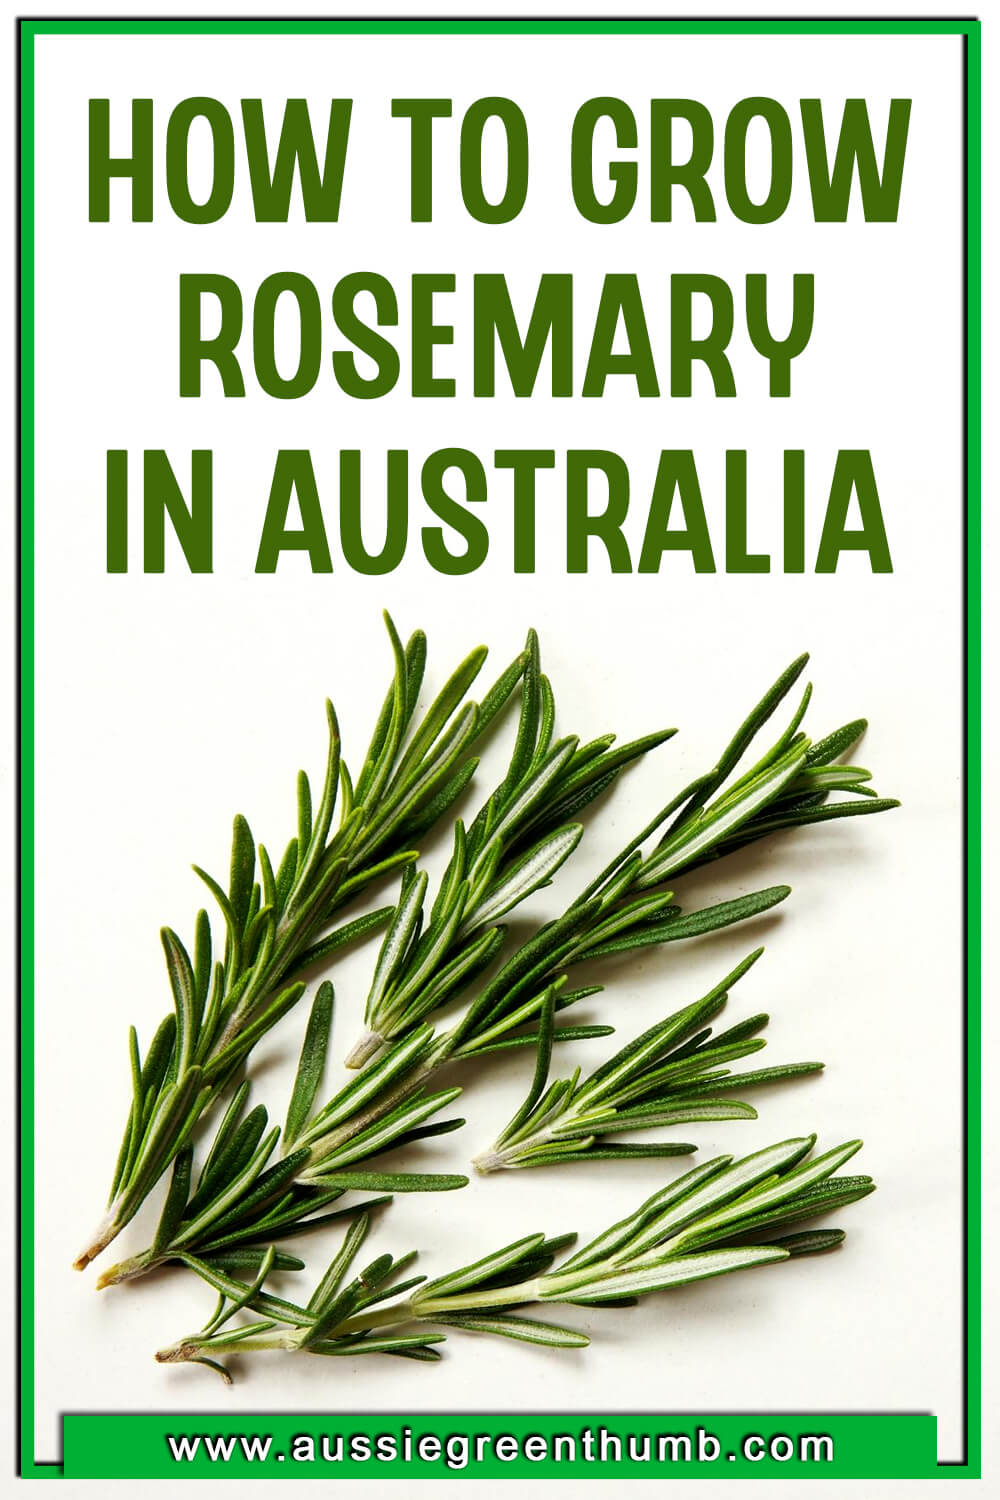 How to Grow Rosemary in Australia